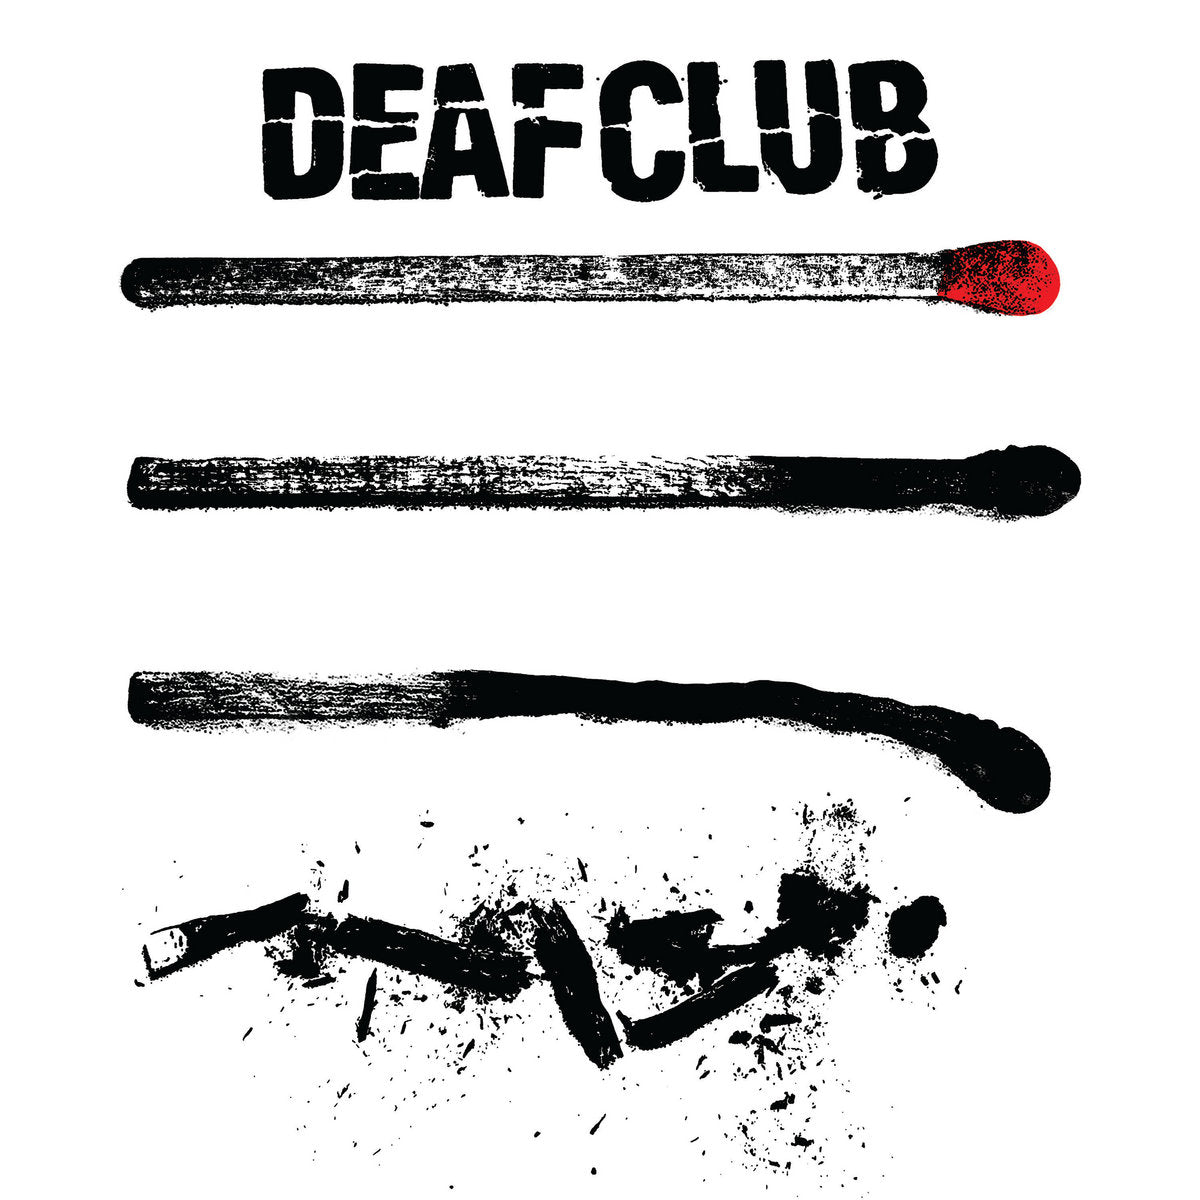 DEAF CLUB "Productive Disruption" LP